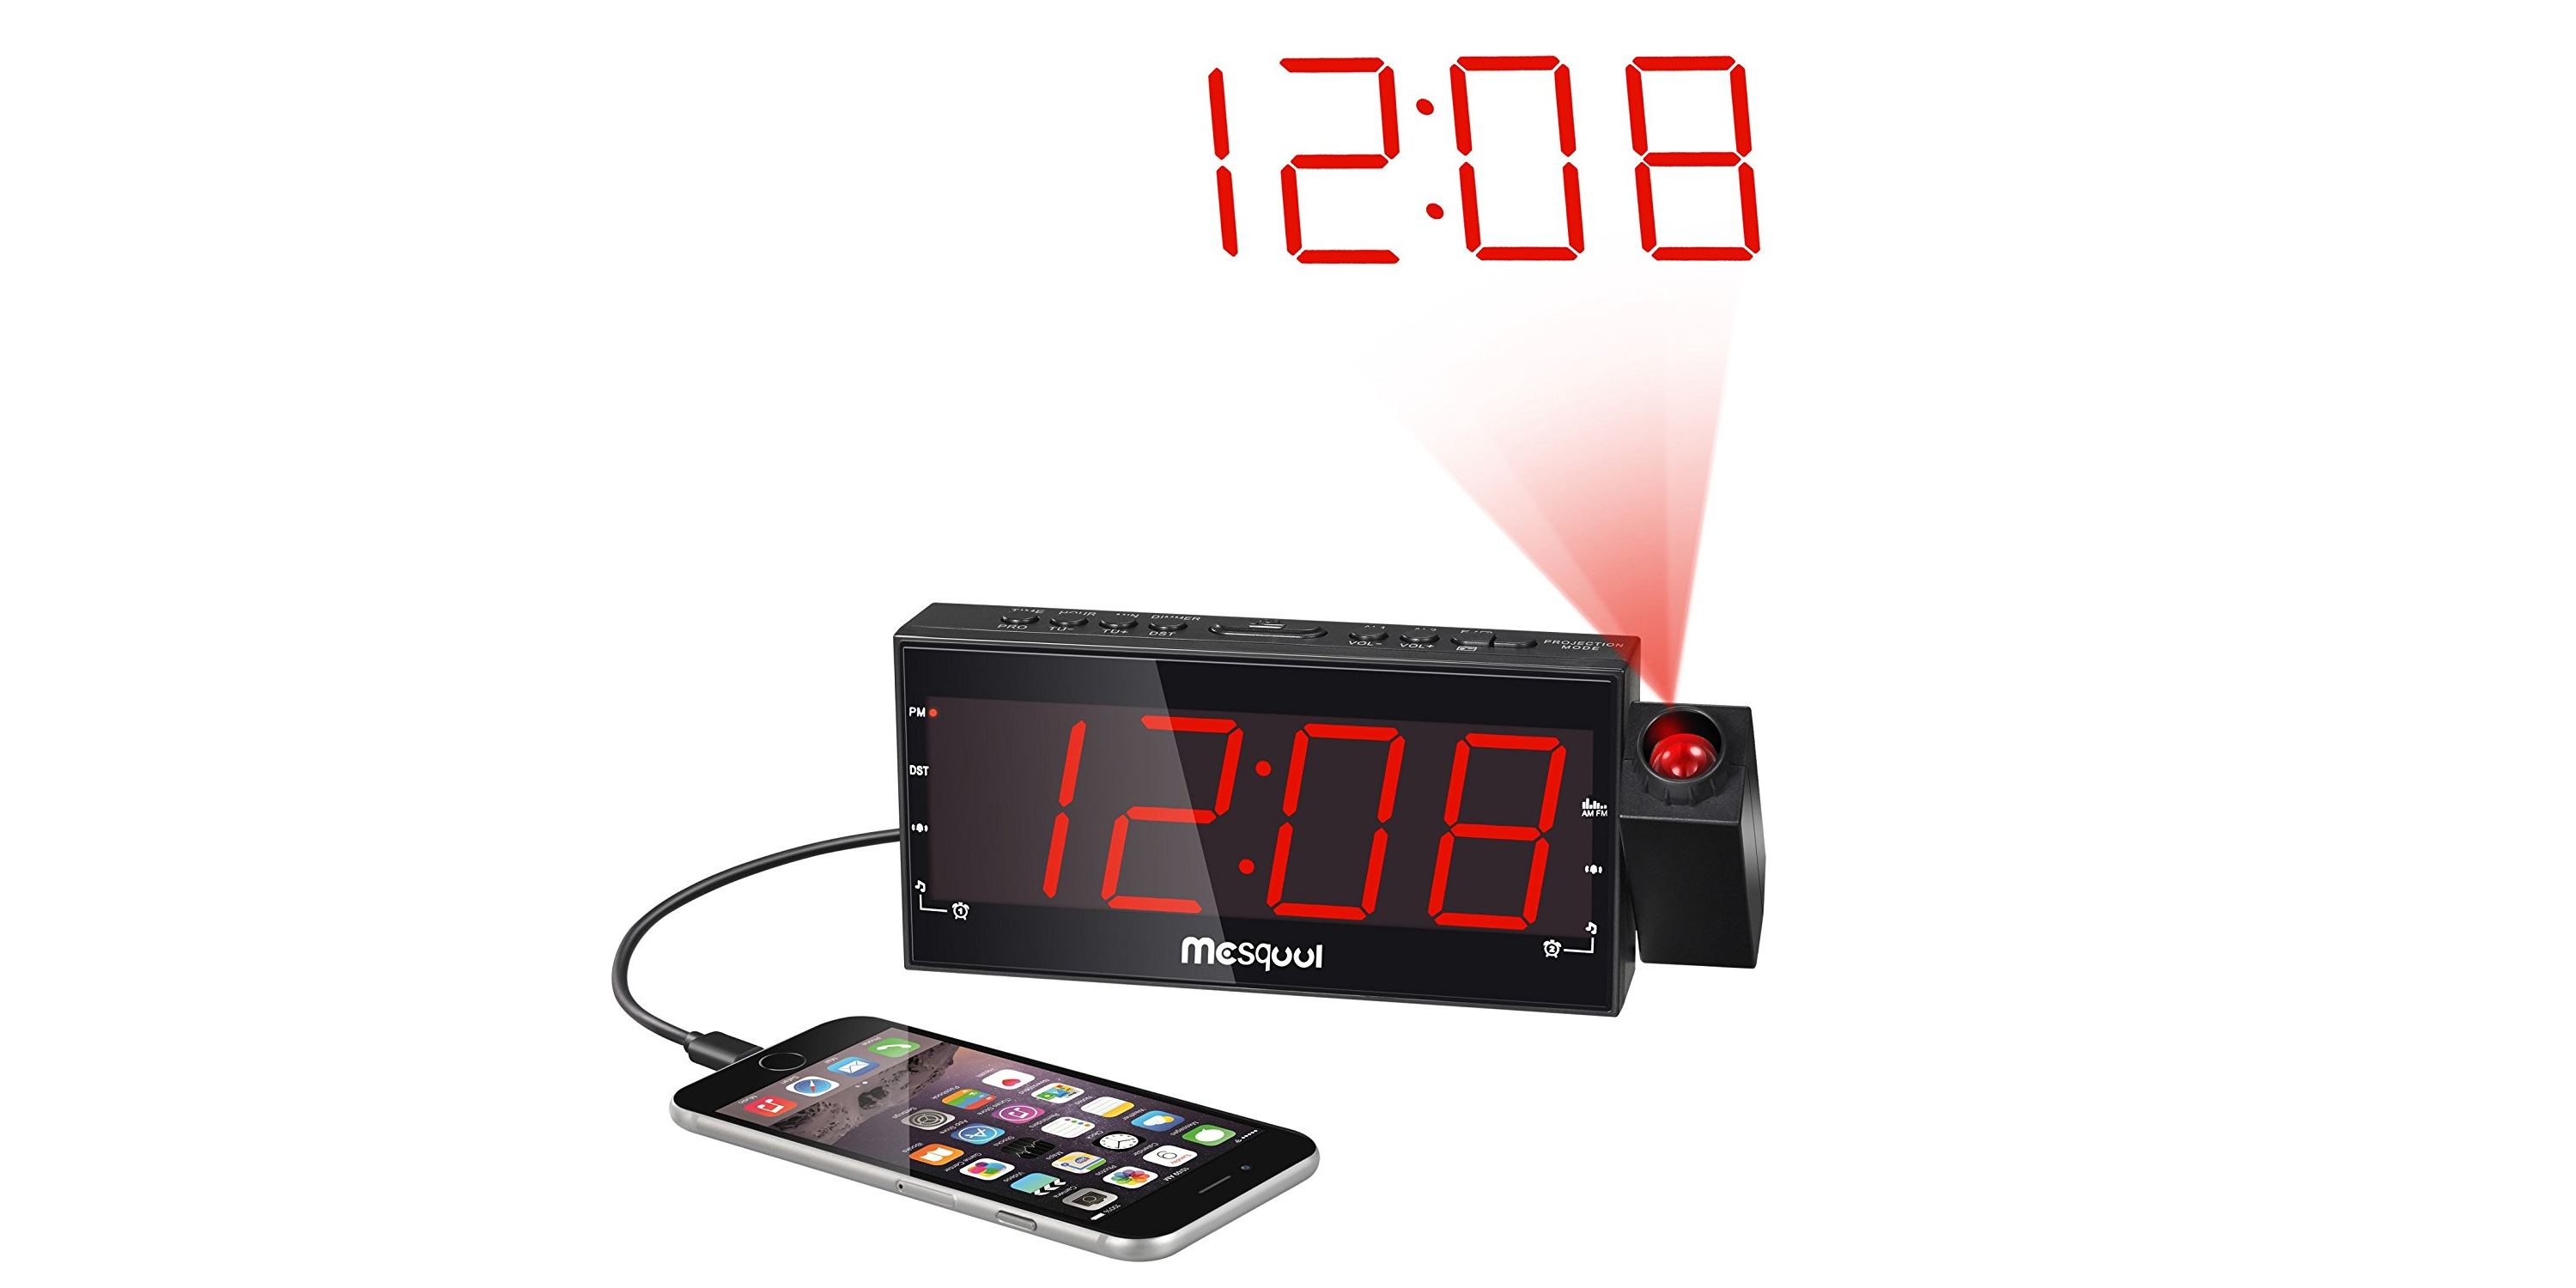 Digital Projection Alarm Clock Radio Only $15.74!